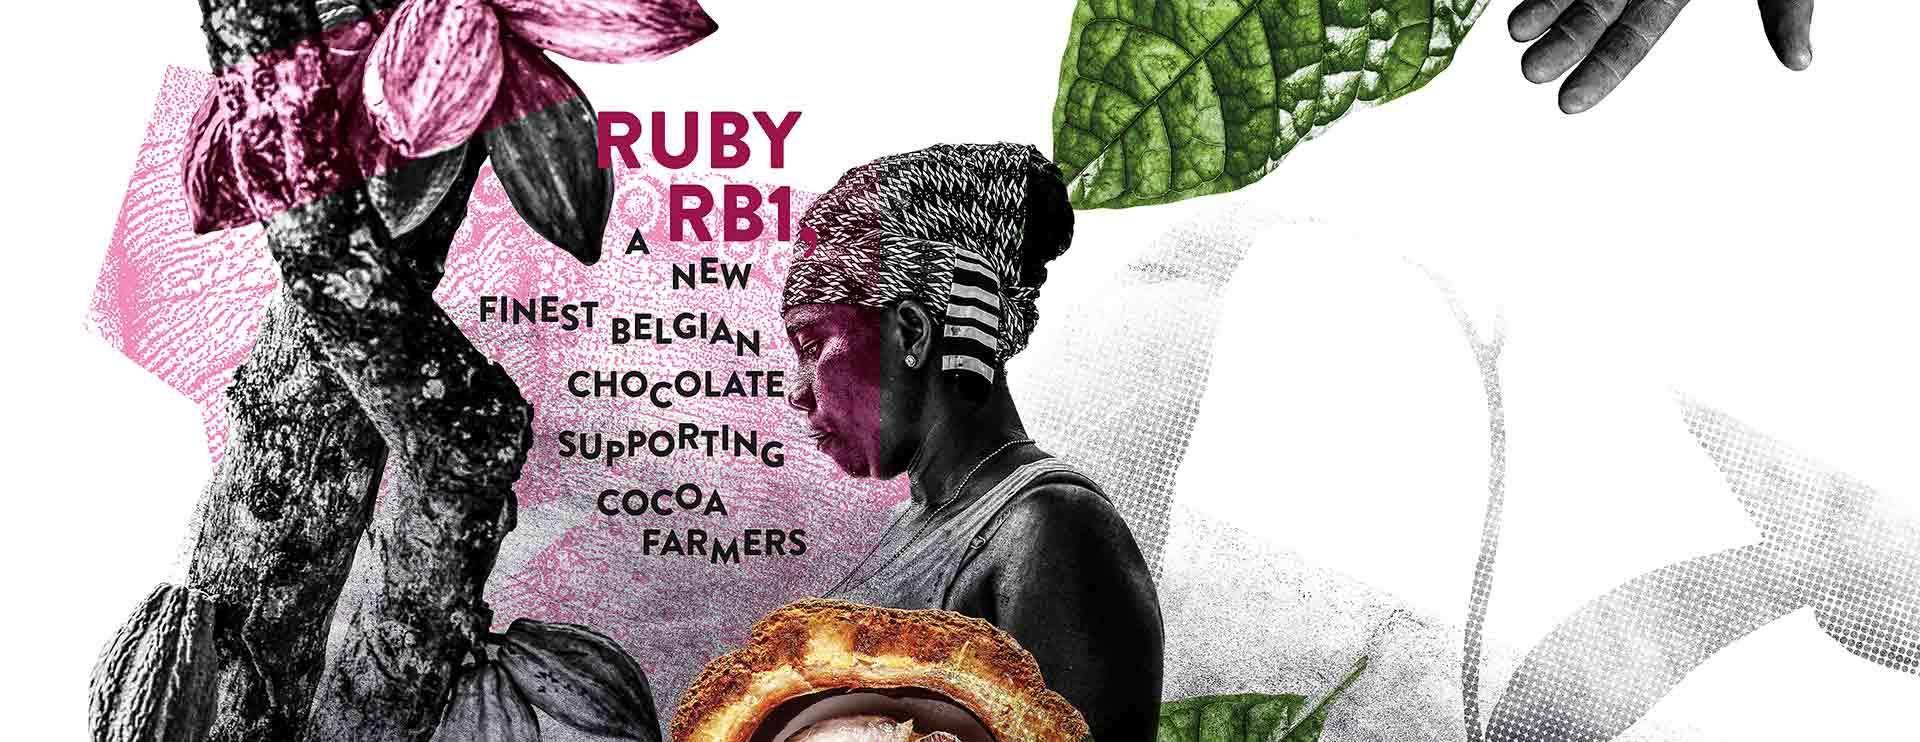 Callebaut Ruby RB1 Chocolate